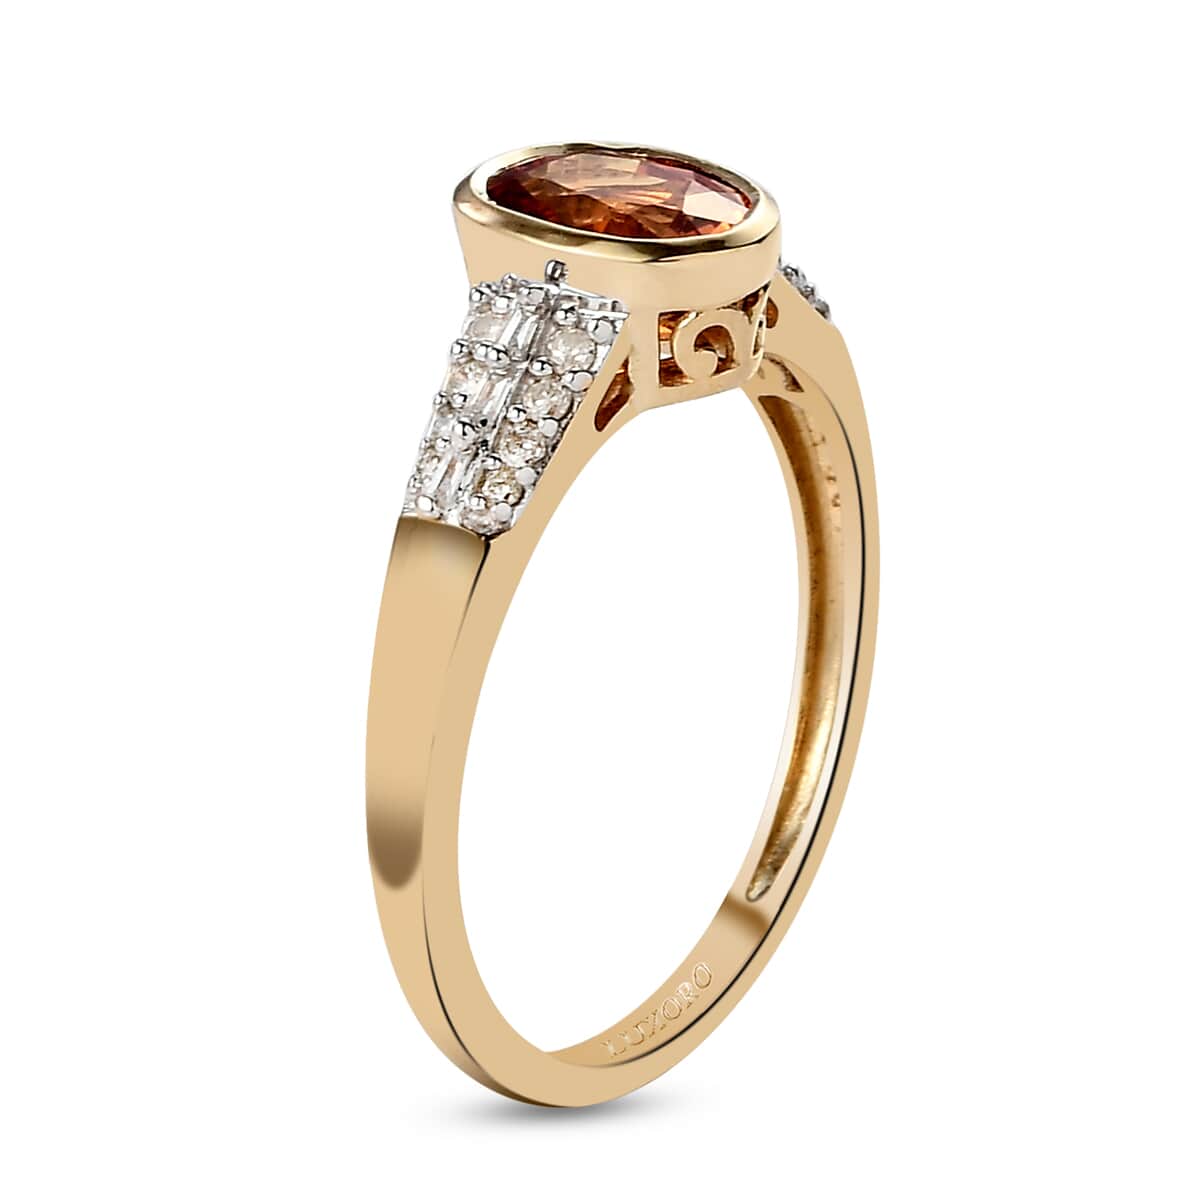 LUXORO 10K Yellow Gold Premium Songea Sapphire and Diamond Ring (Size 7.0) 2.10 Grams 1.35 ctw image number 3